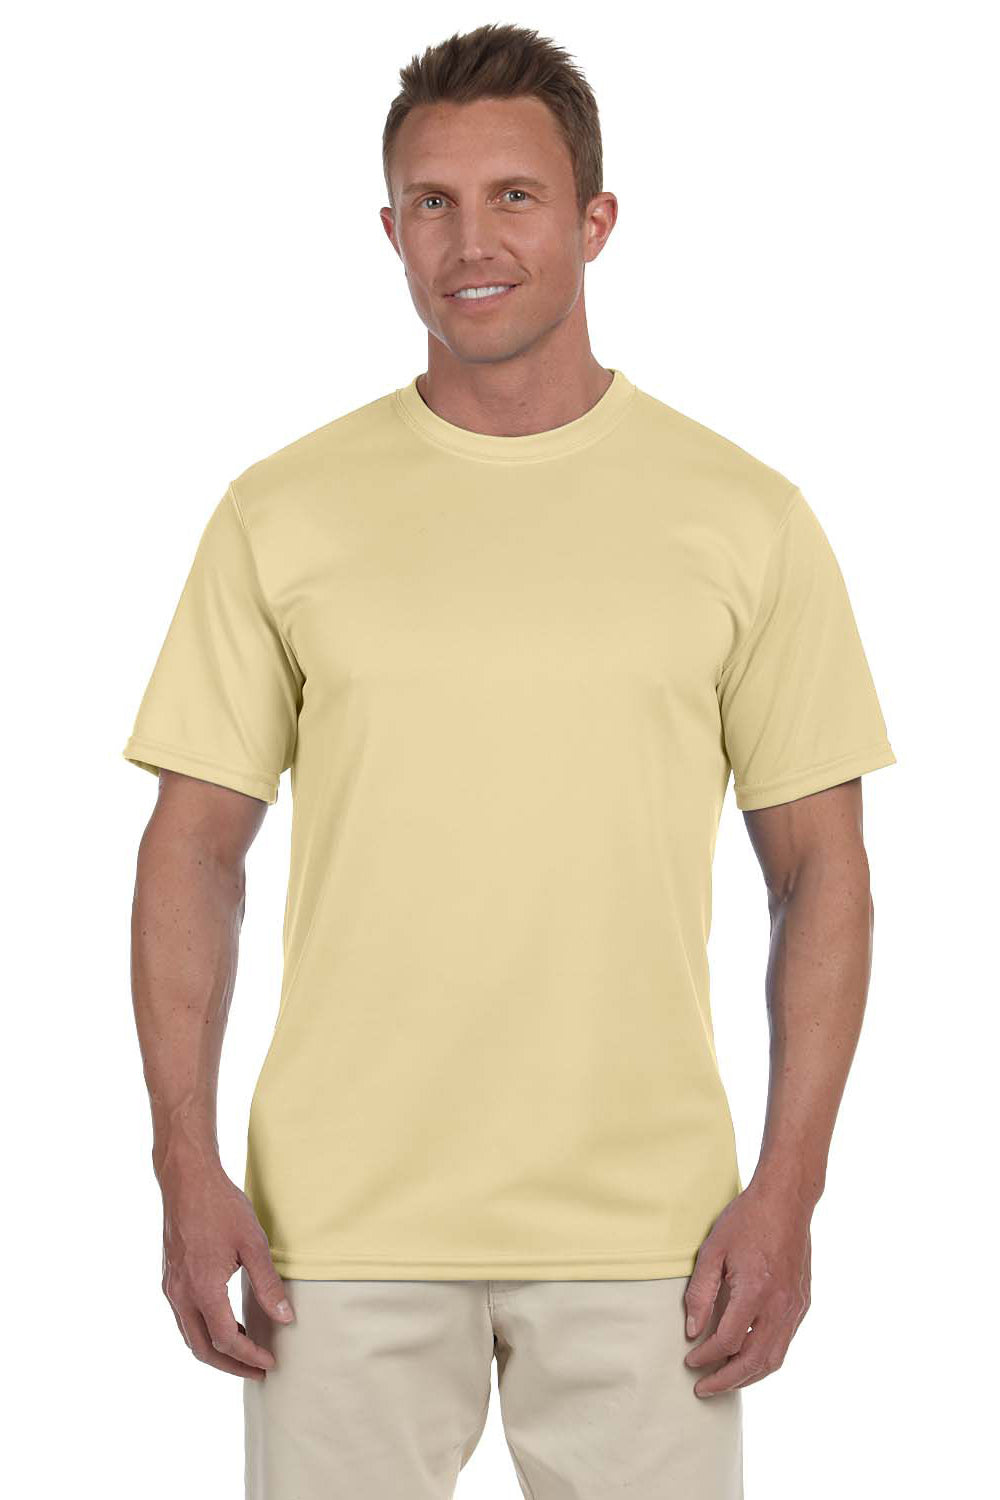 Augusta Sportswear 790 Mens Moisture Wicking Short Sleeve Crewneck T-Shirt Vegas Gold Model Front